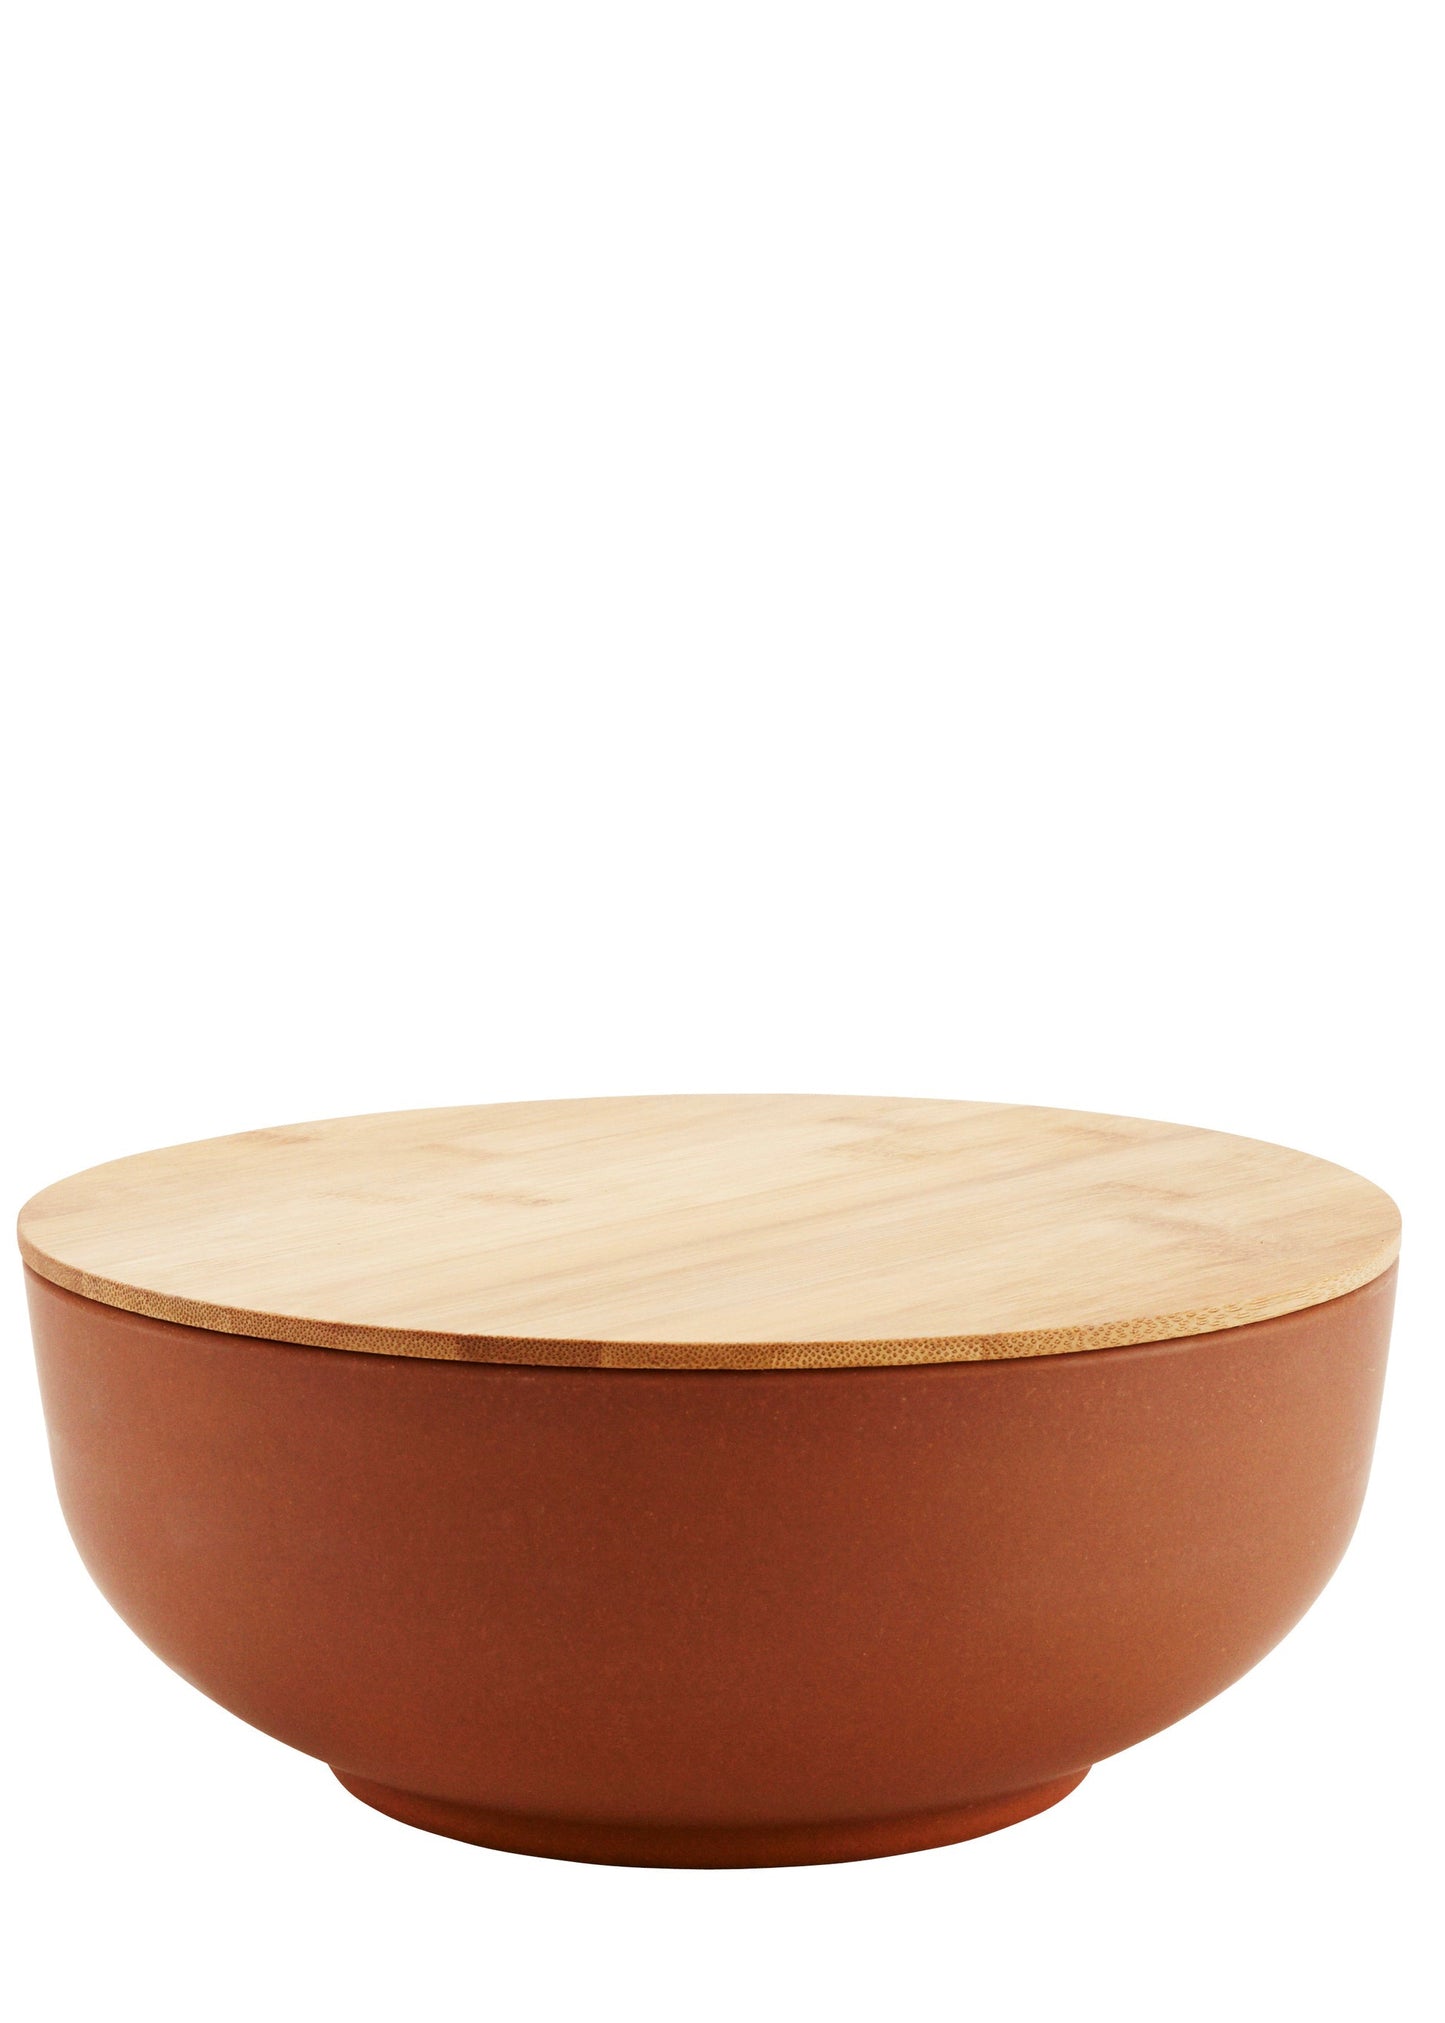 Madam Stoltz - Bamboo storage bowls with lids